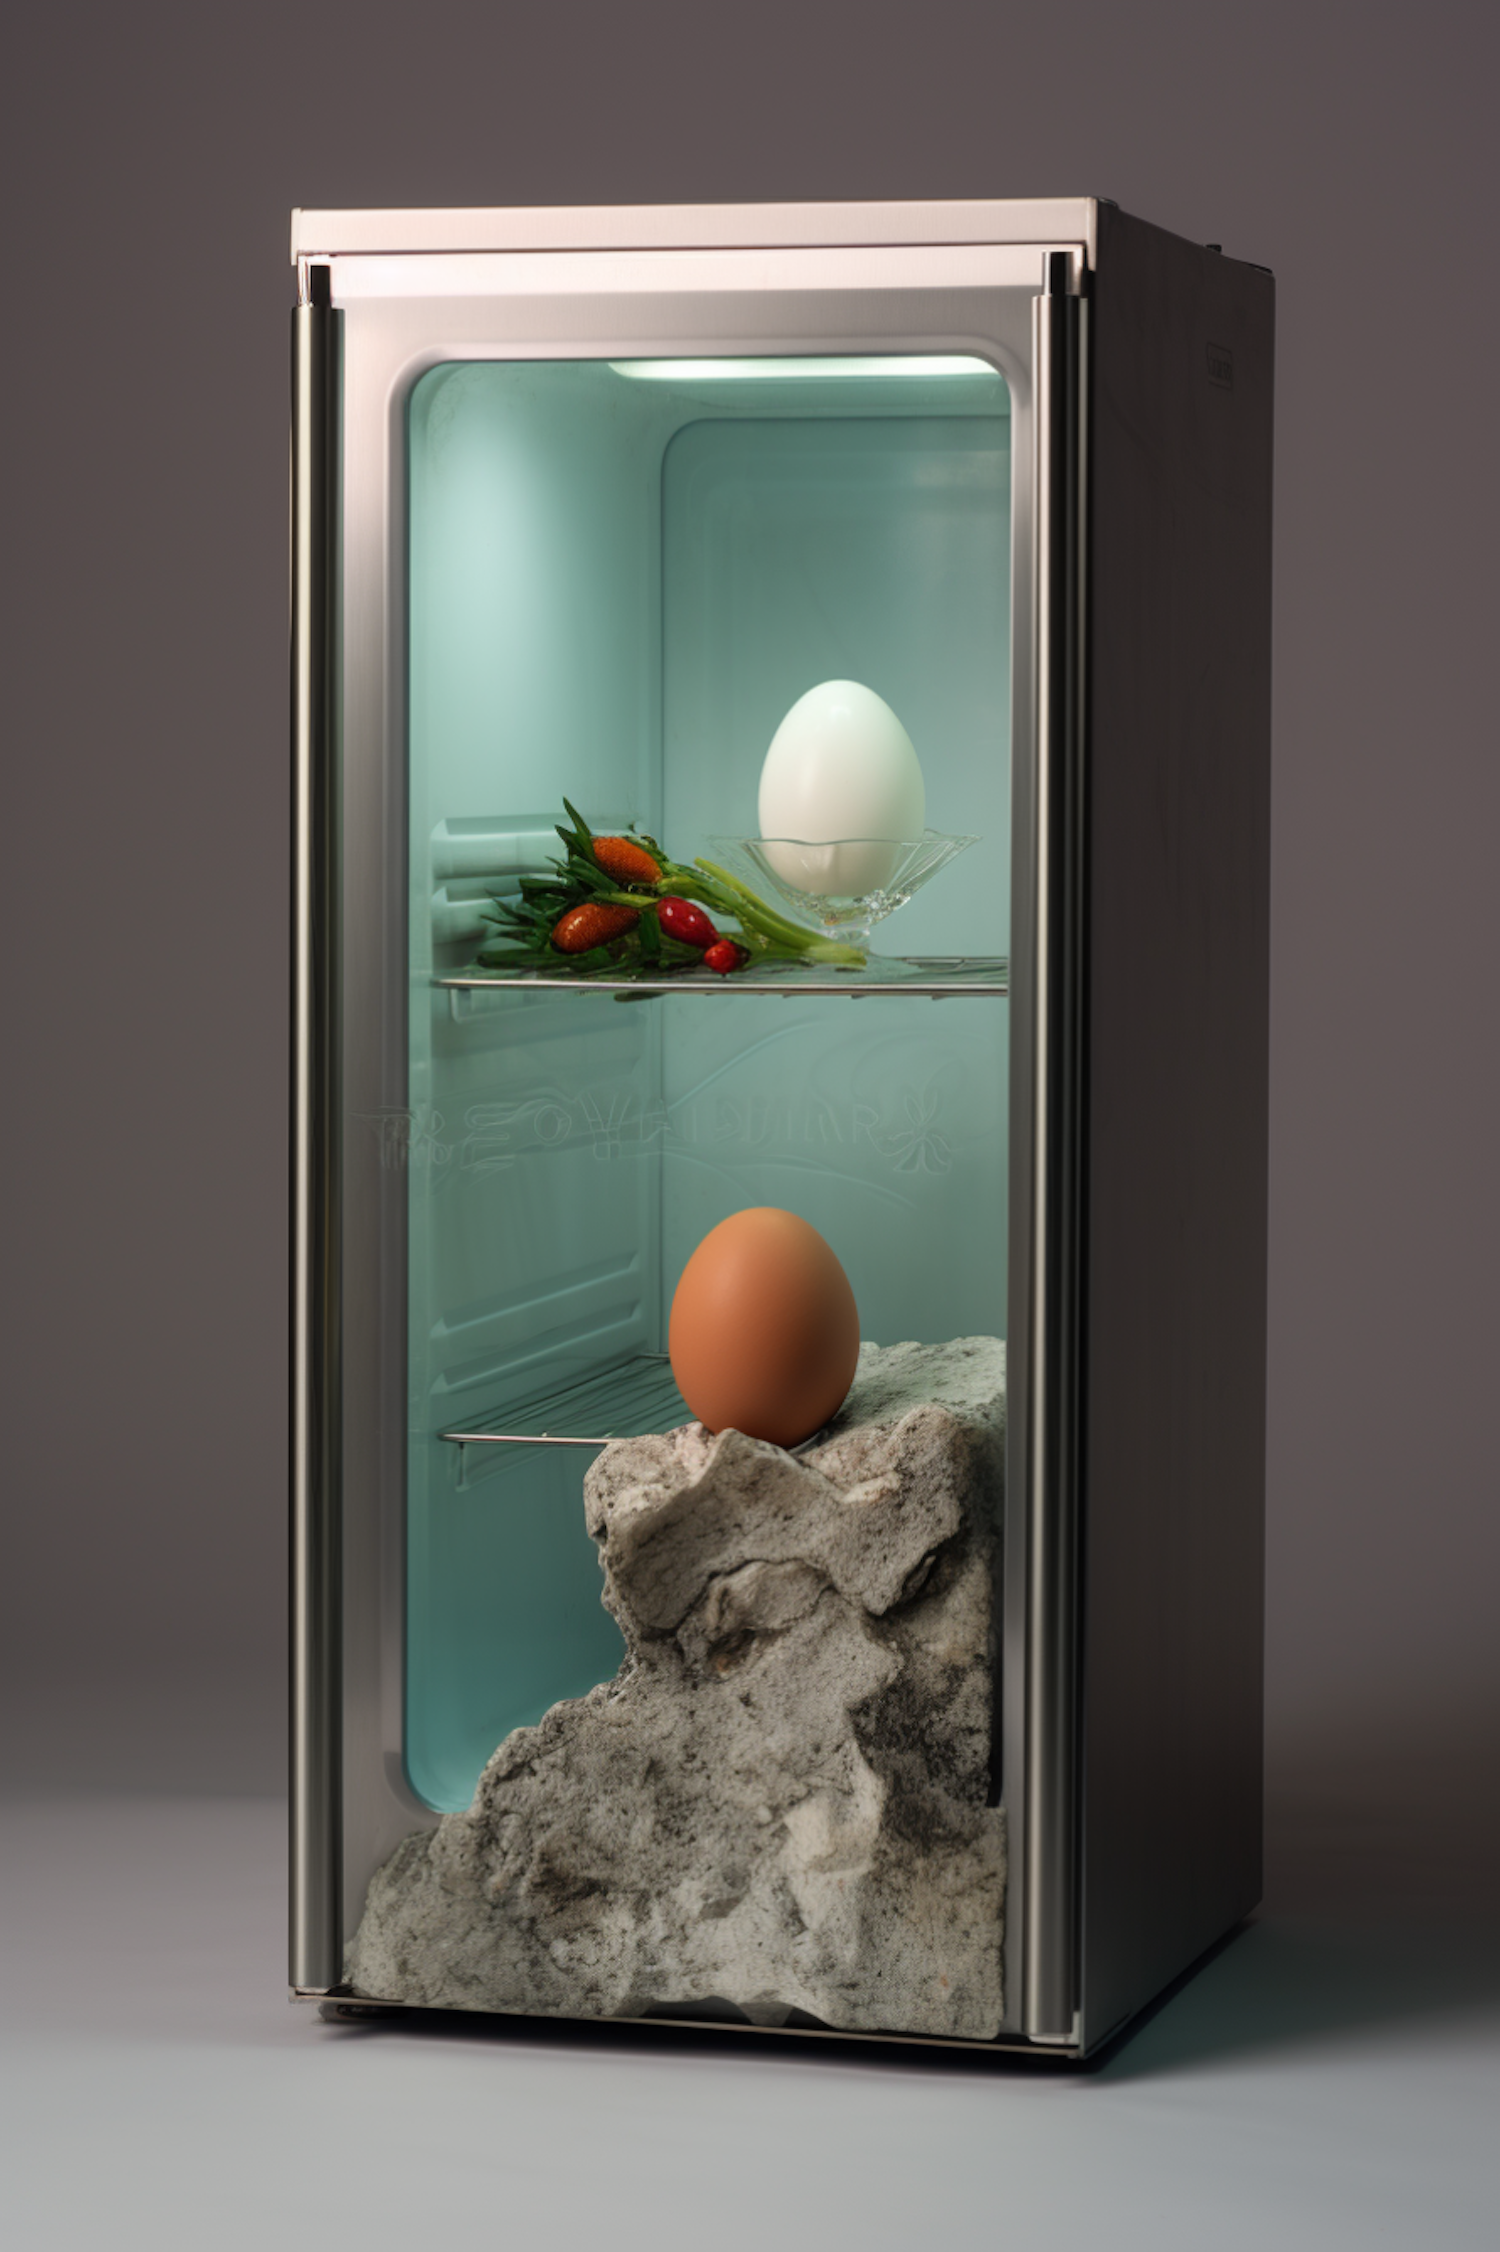 Minimalist Fridge with Artful Egg Display